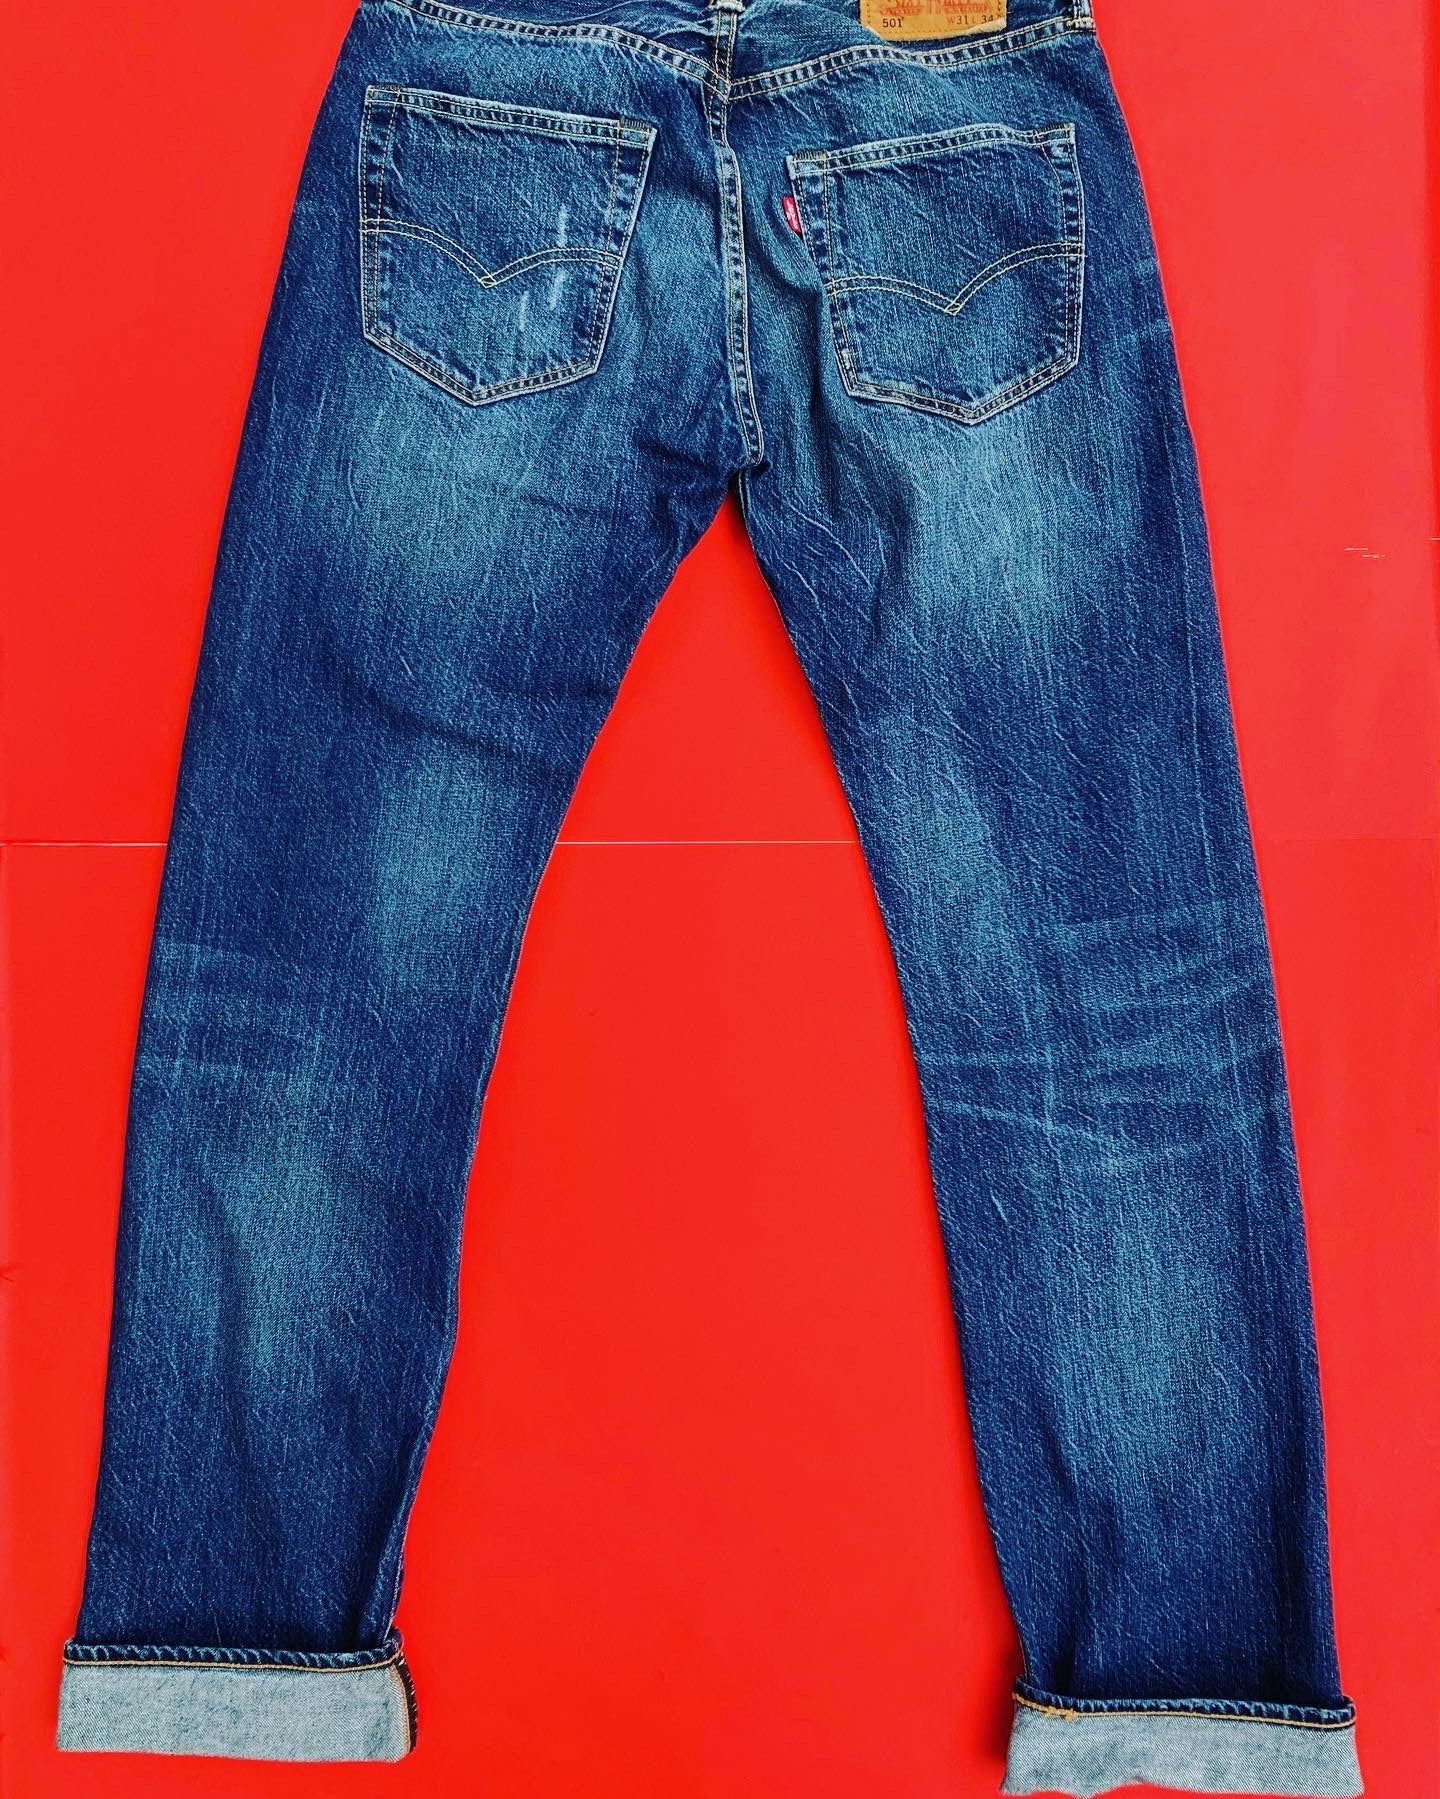 Levi 501 Selvedge Jeans